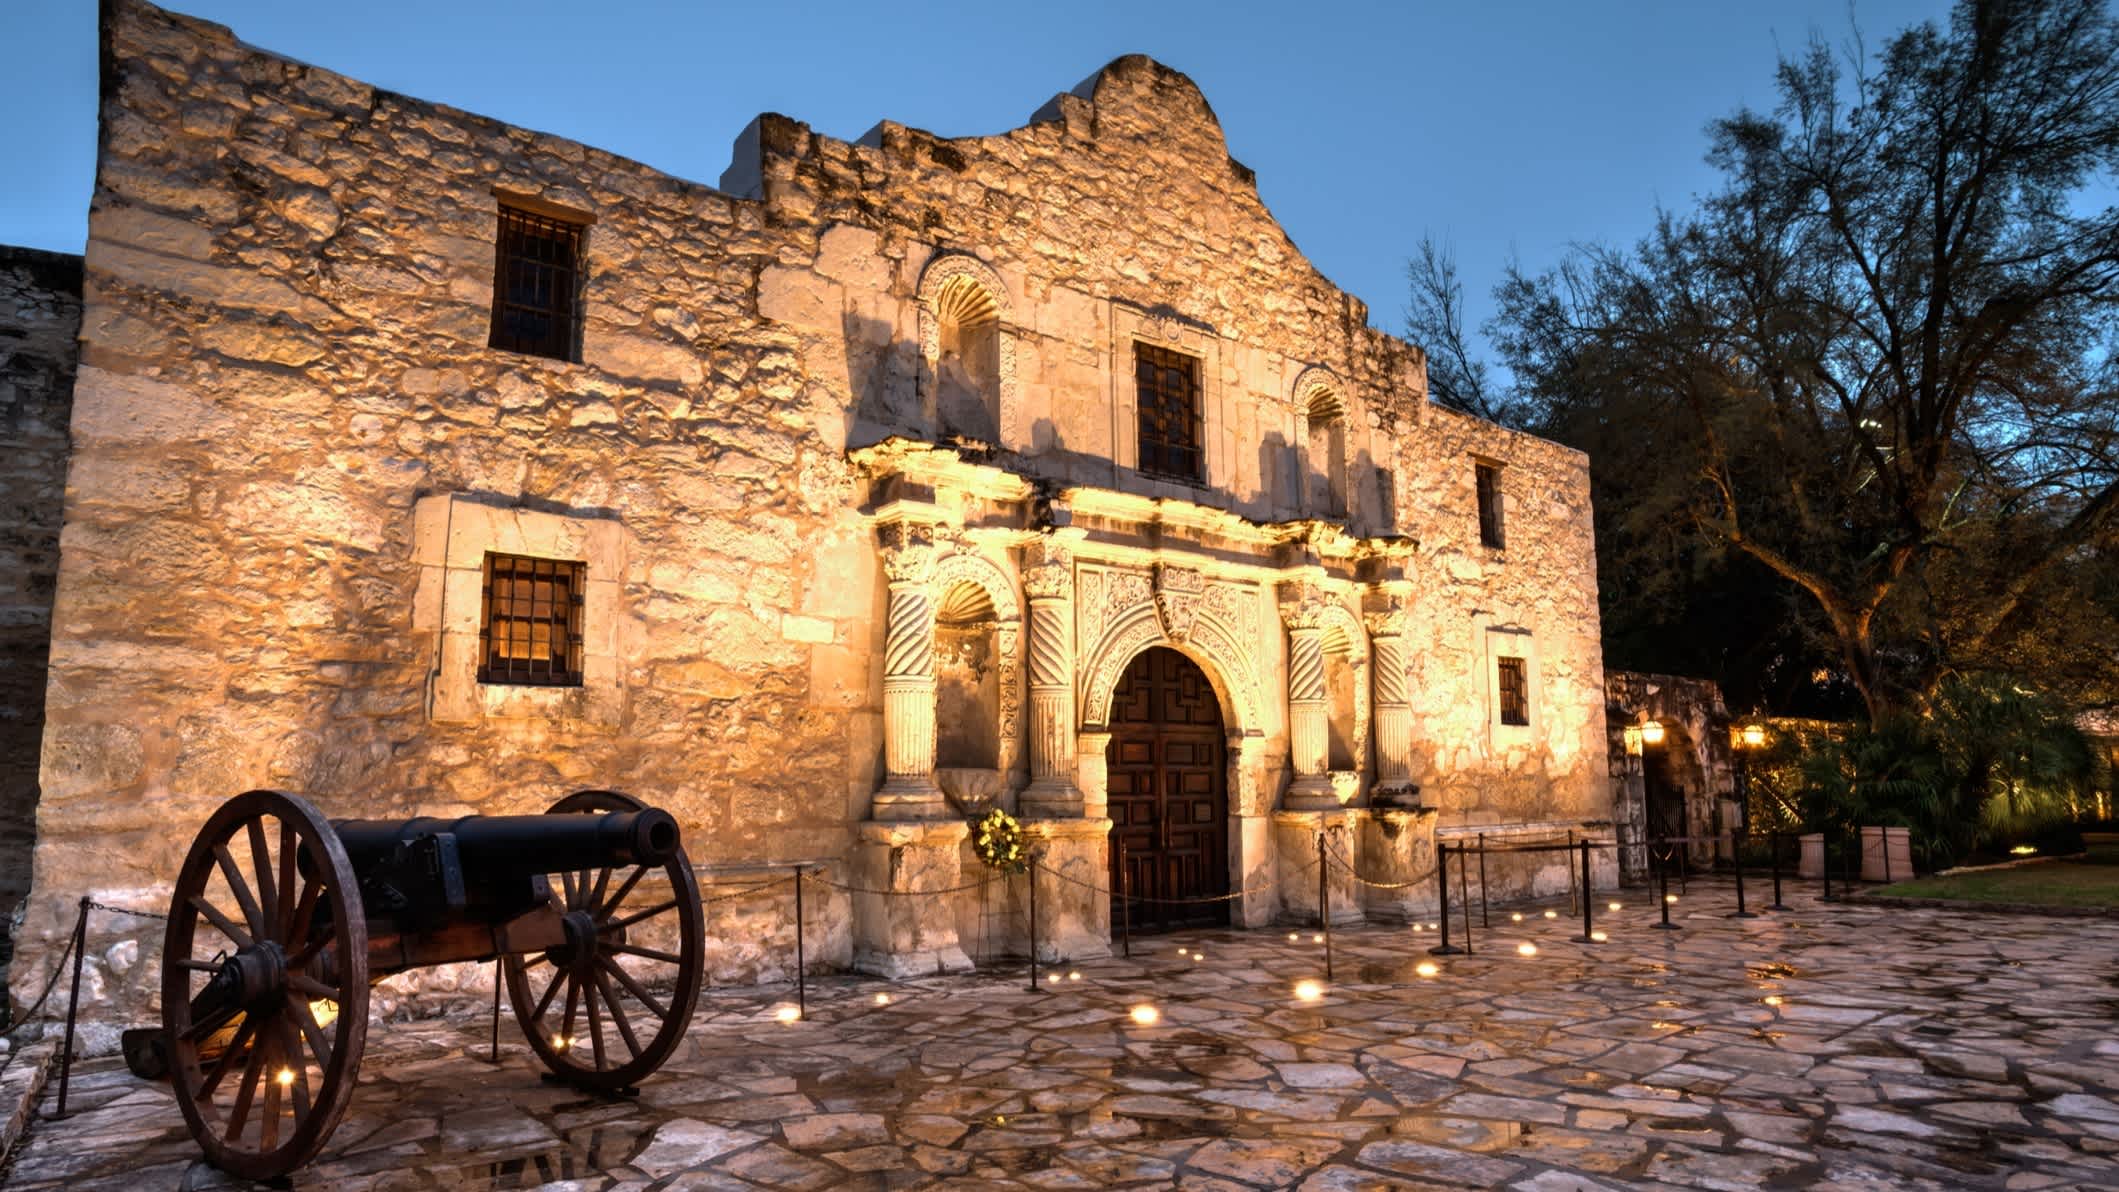 Vue extérieure de l'historique Alamo, Texas, États-Unis
